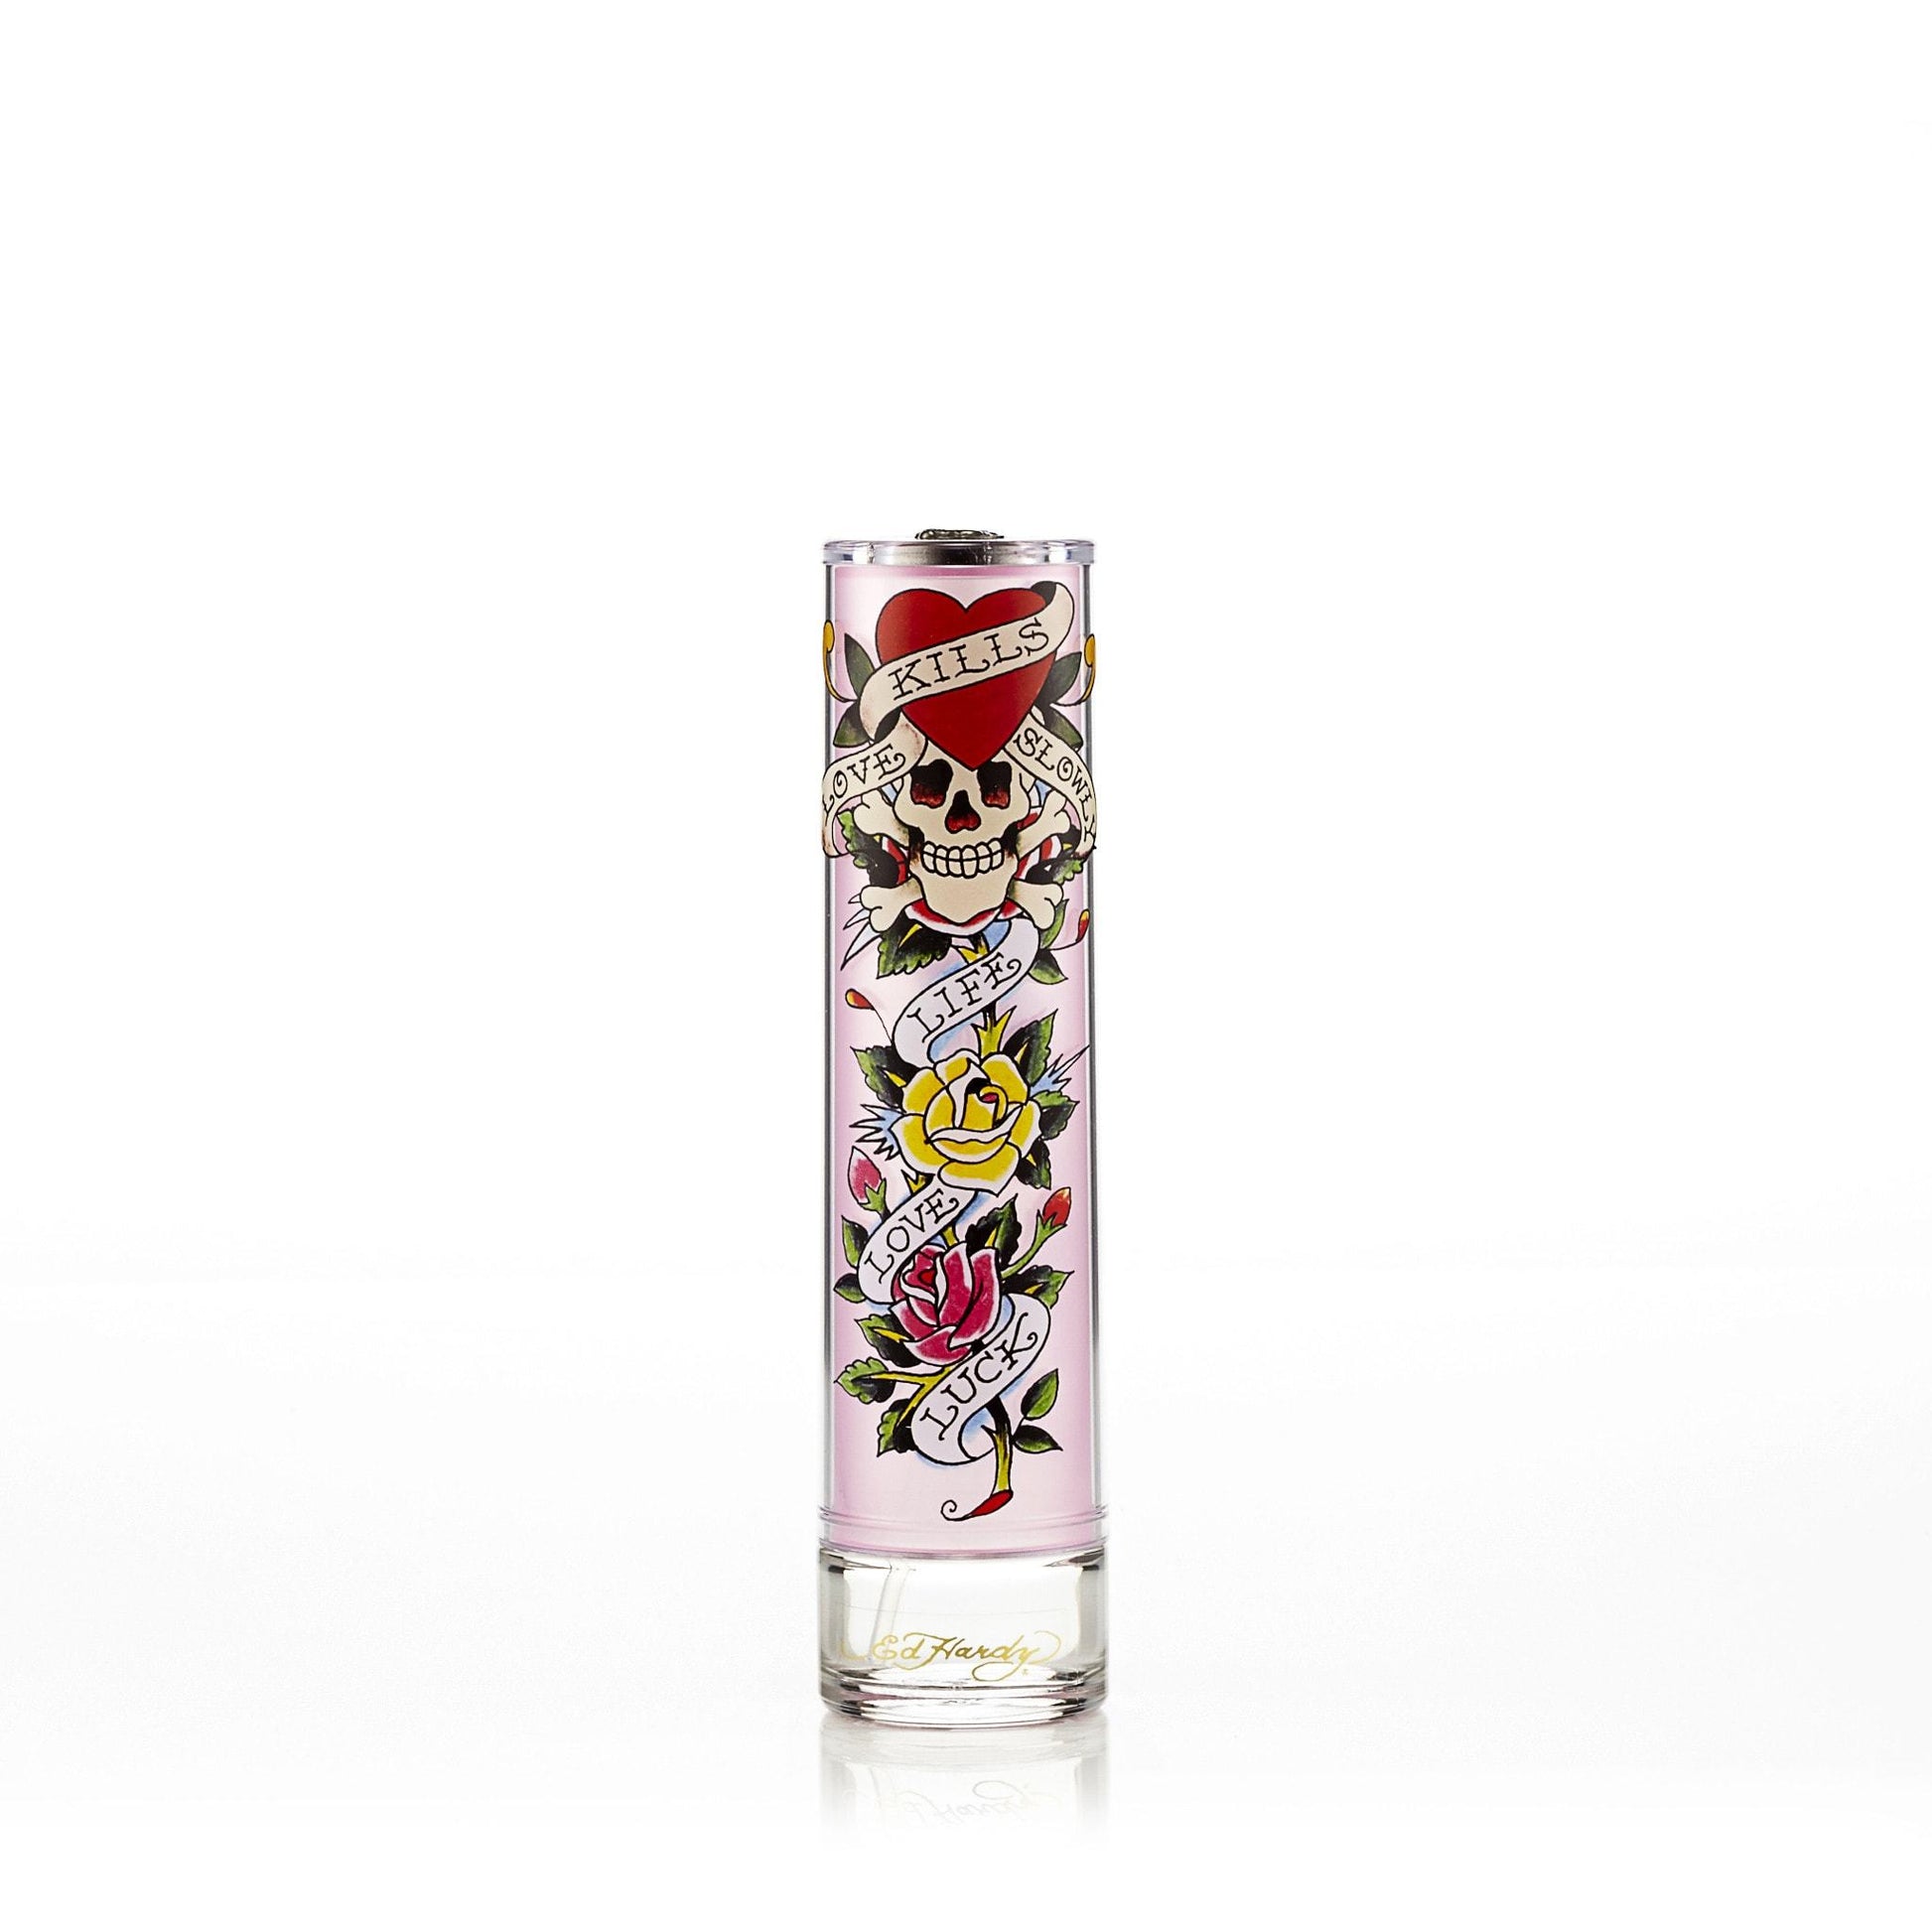 Ed Hardy Eau de Parfum Spray for Women by Christian Audigier, Product image 4